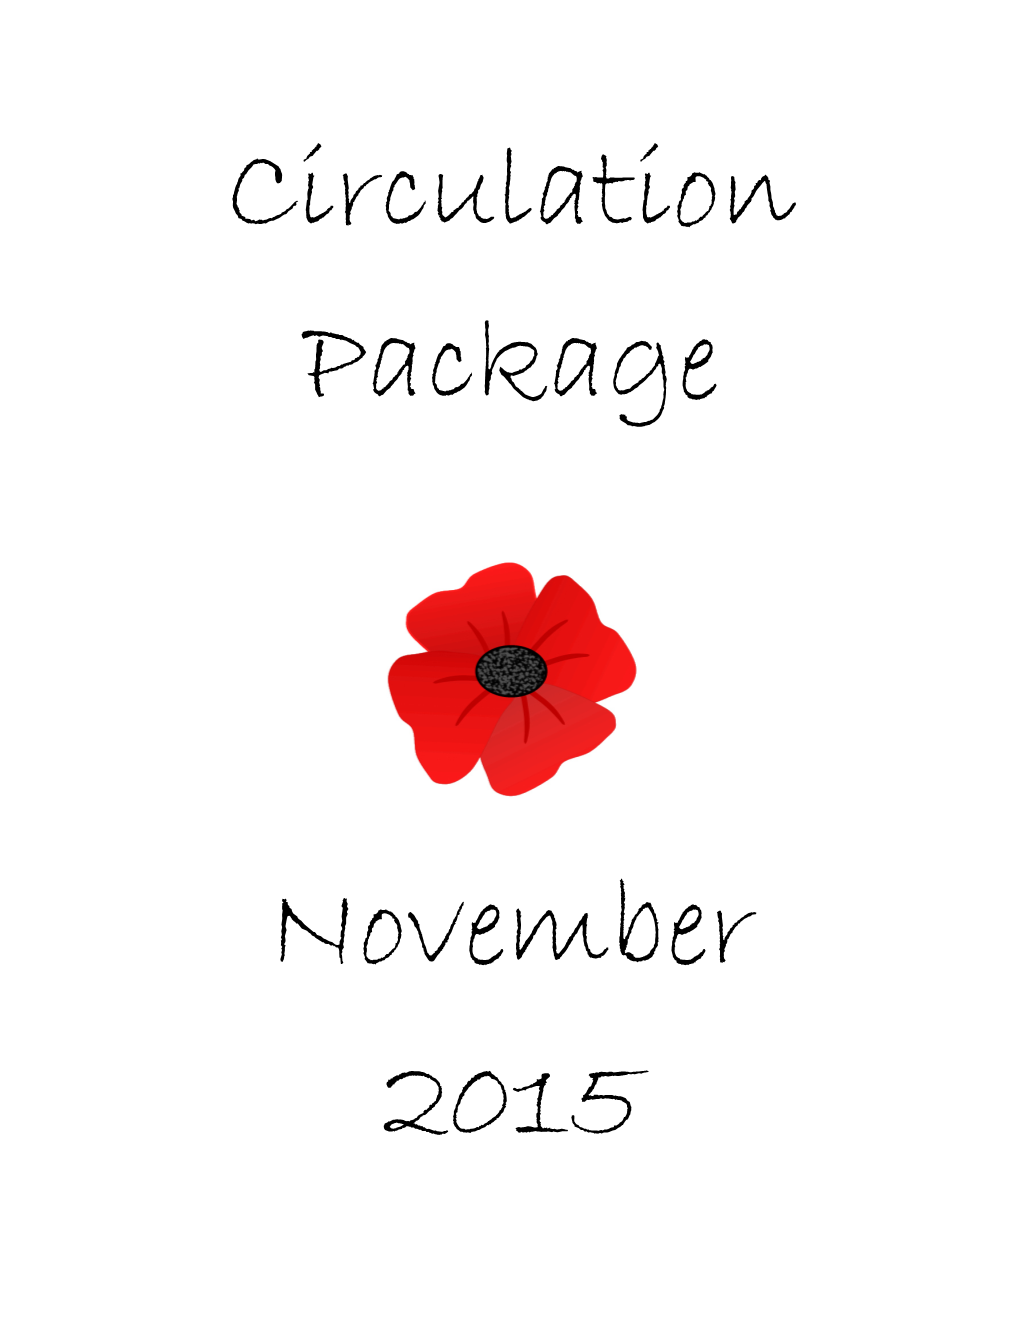 2015 11 17 Circulation Package.Pdf